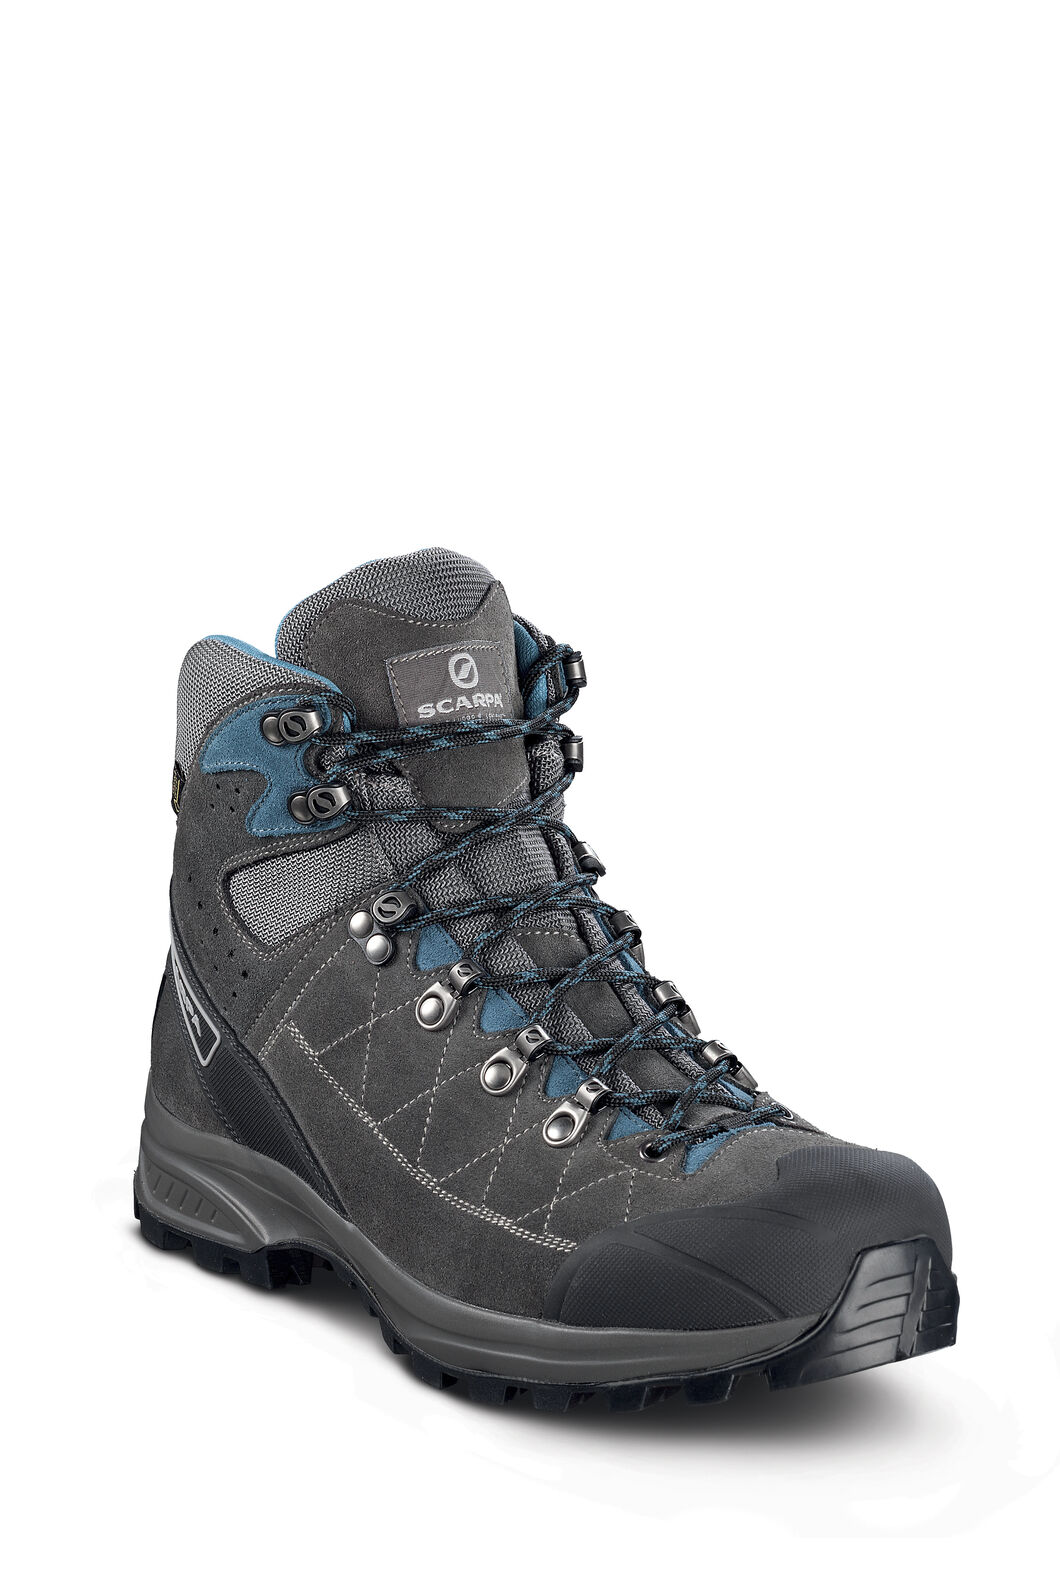 Scarpa Men's Kailash Trek GTX Hiking Boots, Shark/Gray/Lake Blue, hi-res